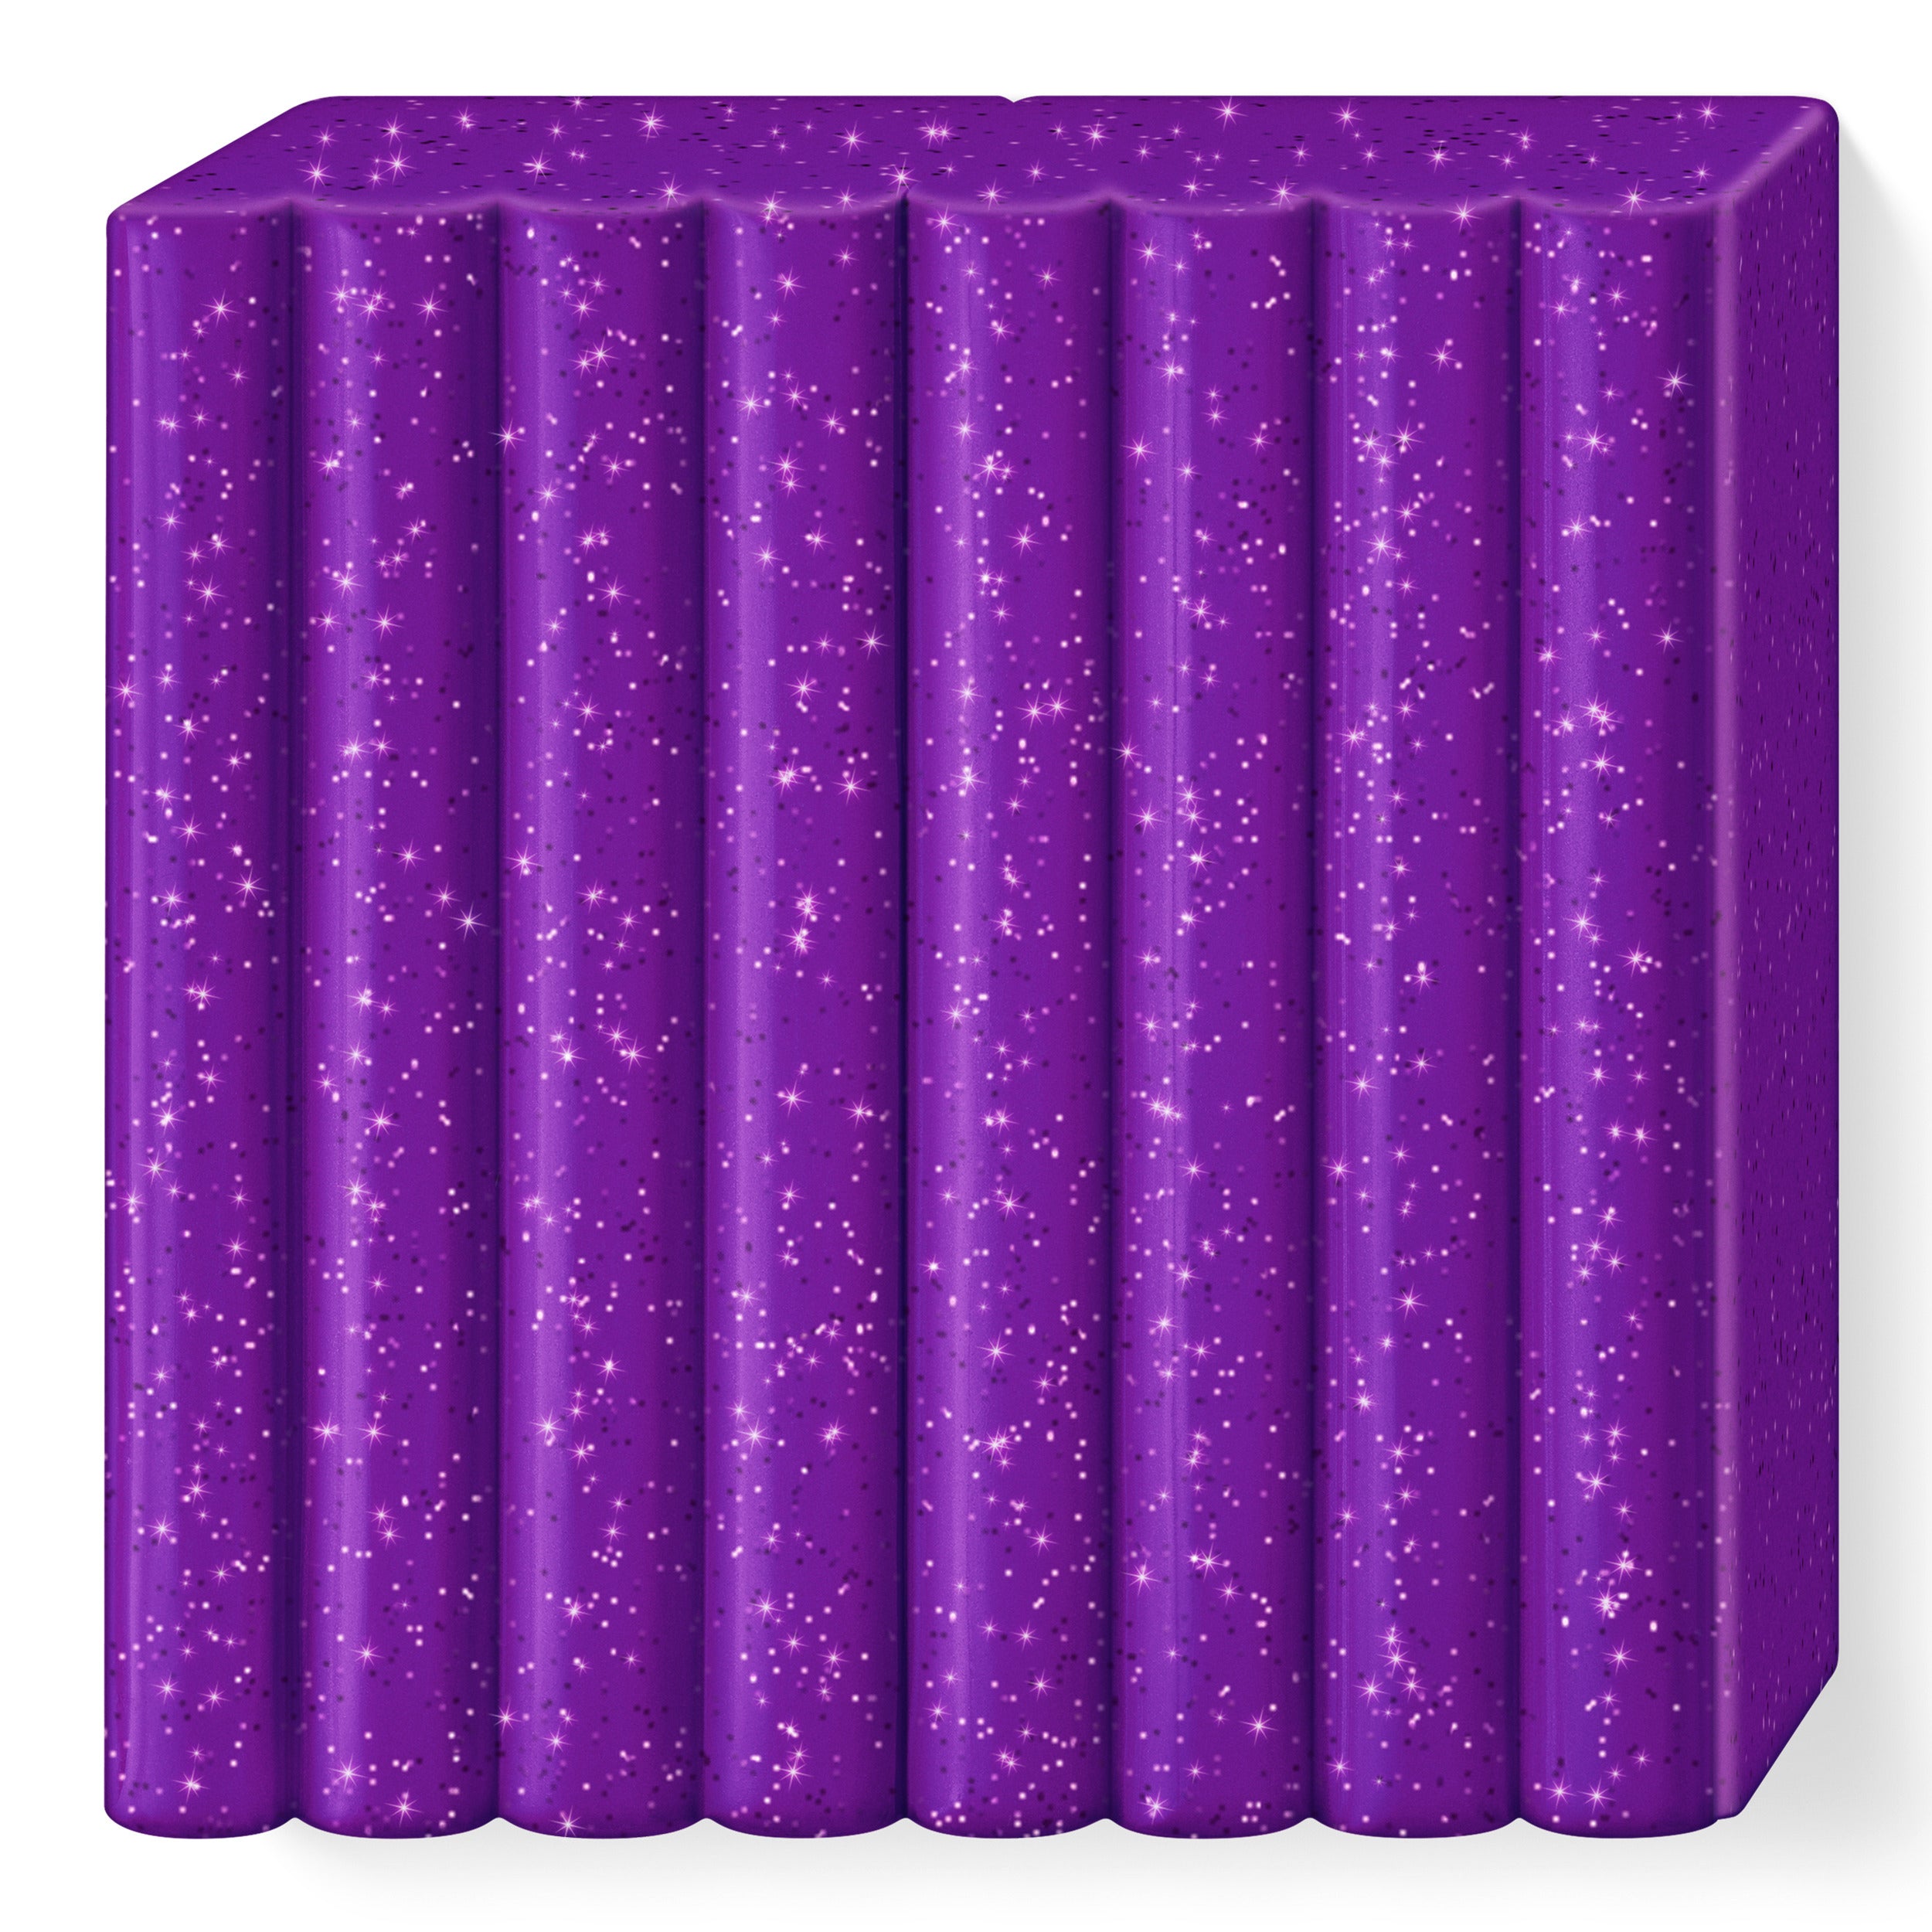 Fimo Effect Polymer Clay Standard Block 57g (2oz) - Glitter Purple